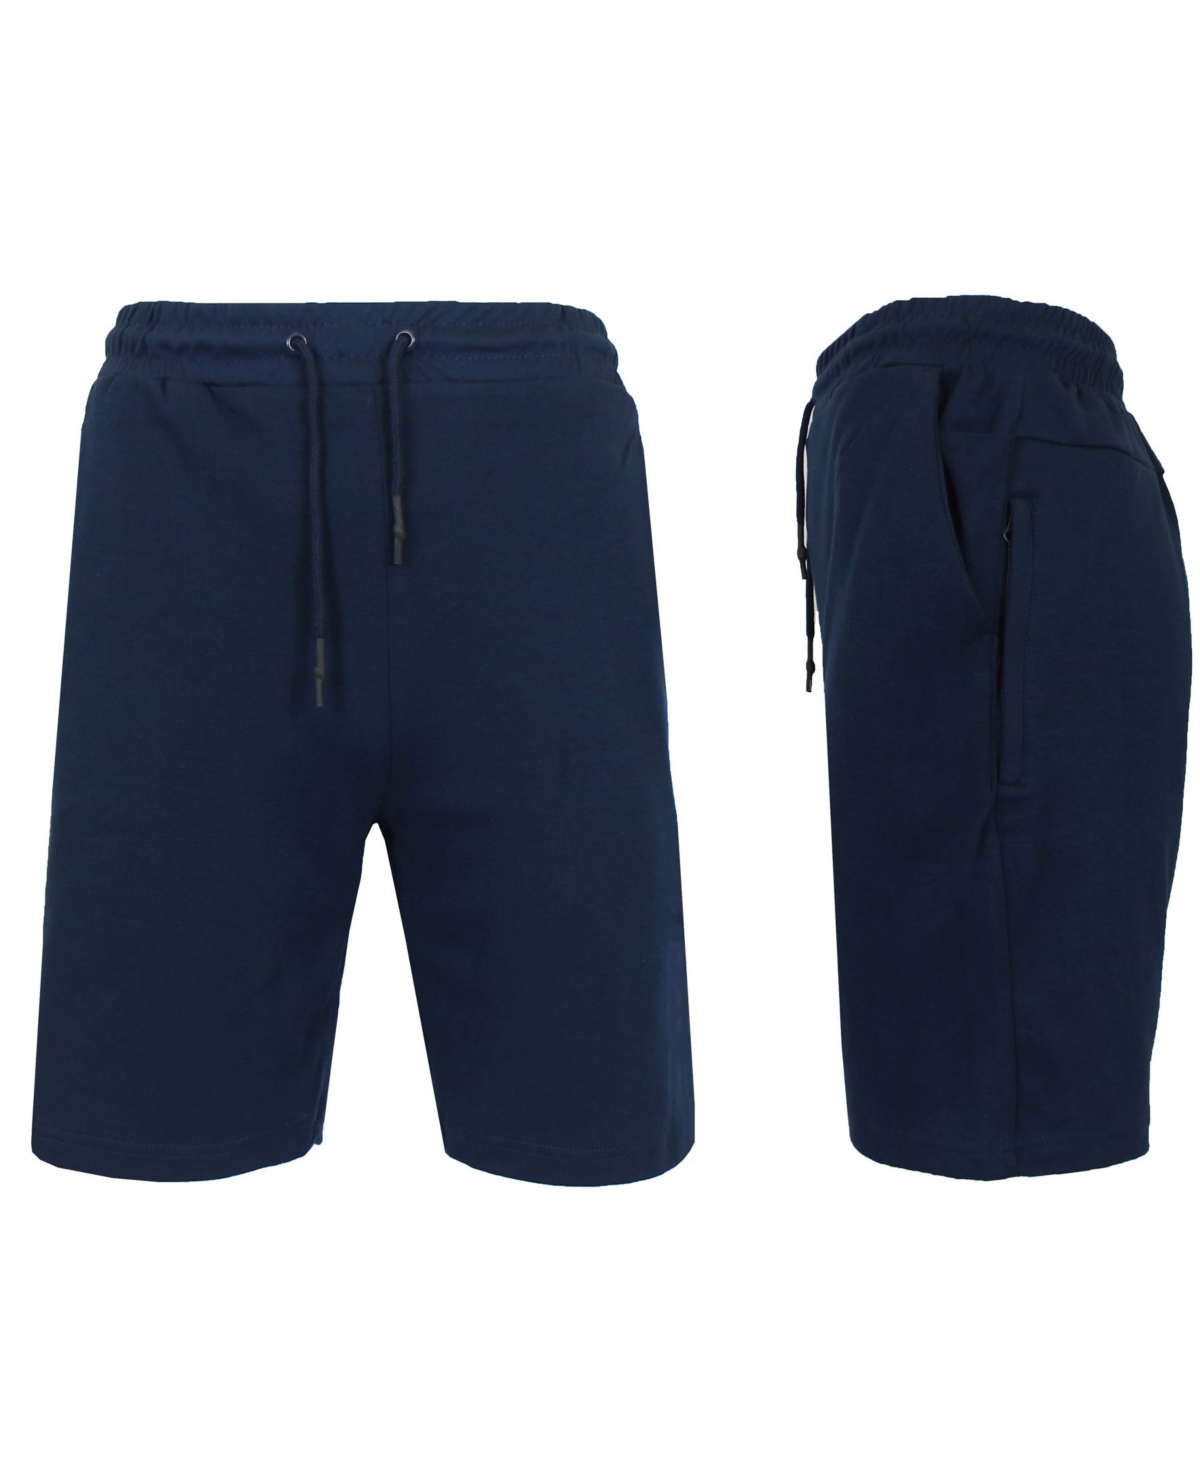 Women's Loose Fit Long Side Zipper Pocket Bermuda Shorts - Woodland Camo